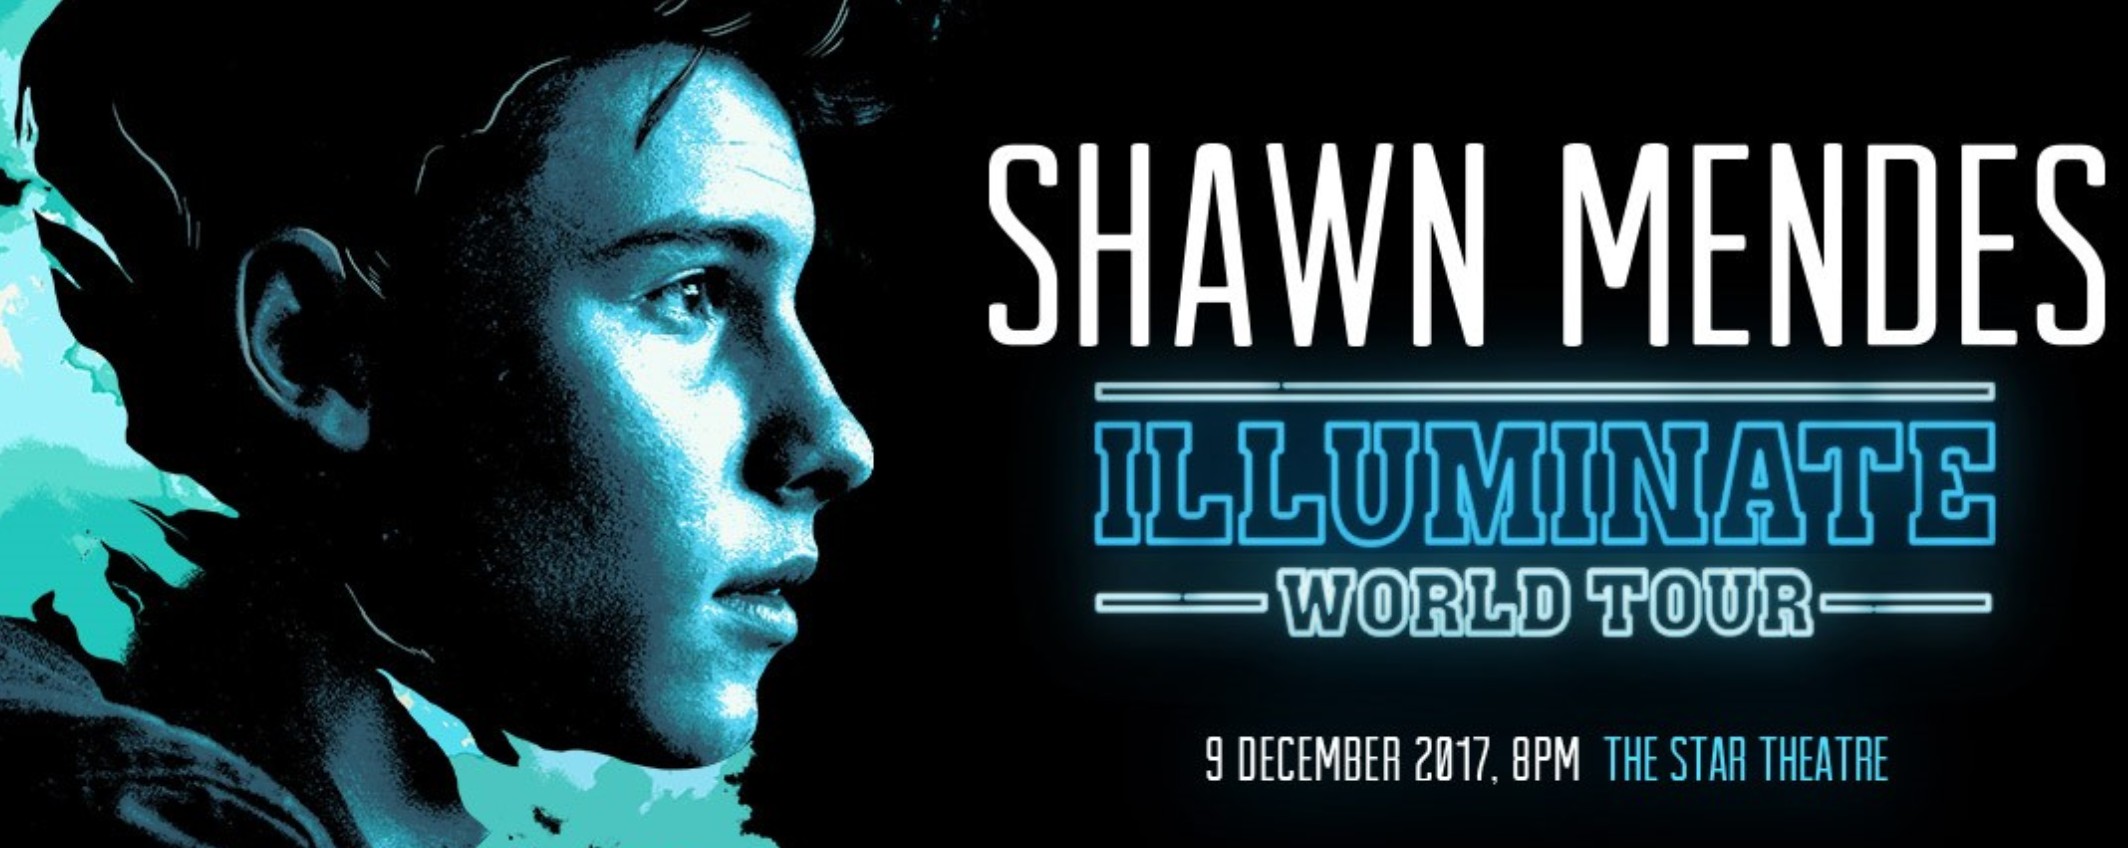 Shawn Mendes - Illuminate World Tour 2017 Singapore